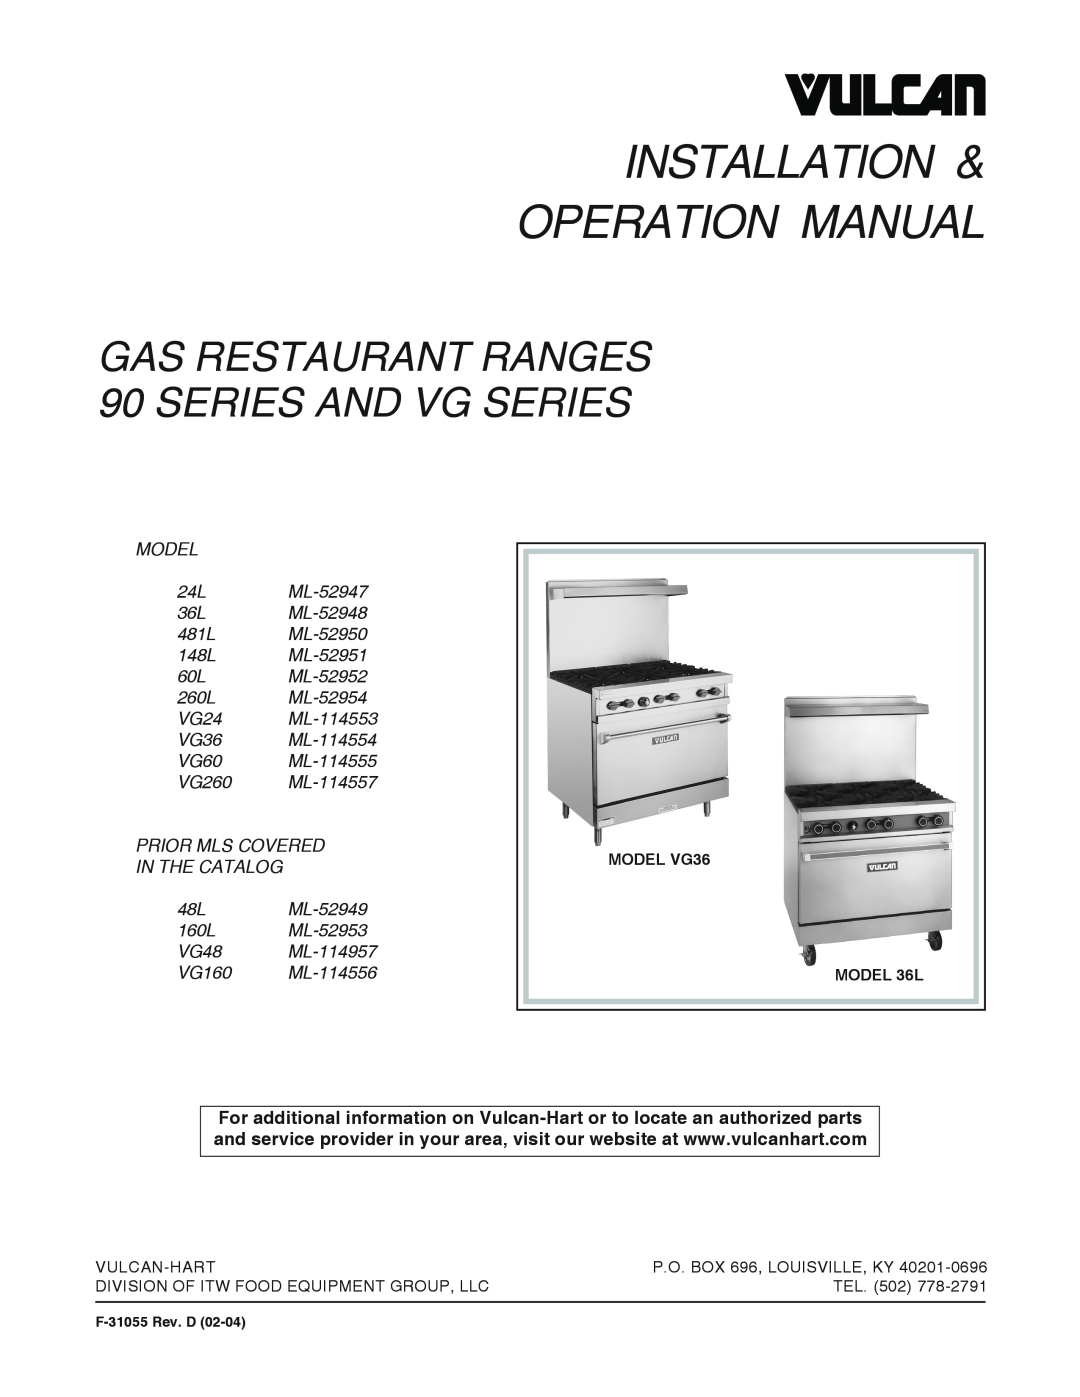 Vulcan-Hart VG160, VG48, VG36, VG24, VG60, VG260, 24L, 481L, 48L operation manual GAS RESTAURANT RANGES 90 SERIES AND VG SERIES 